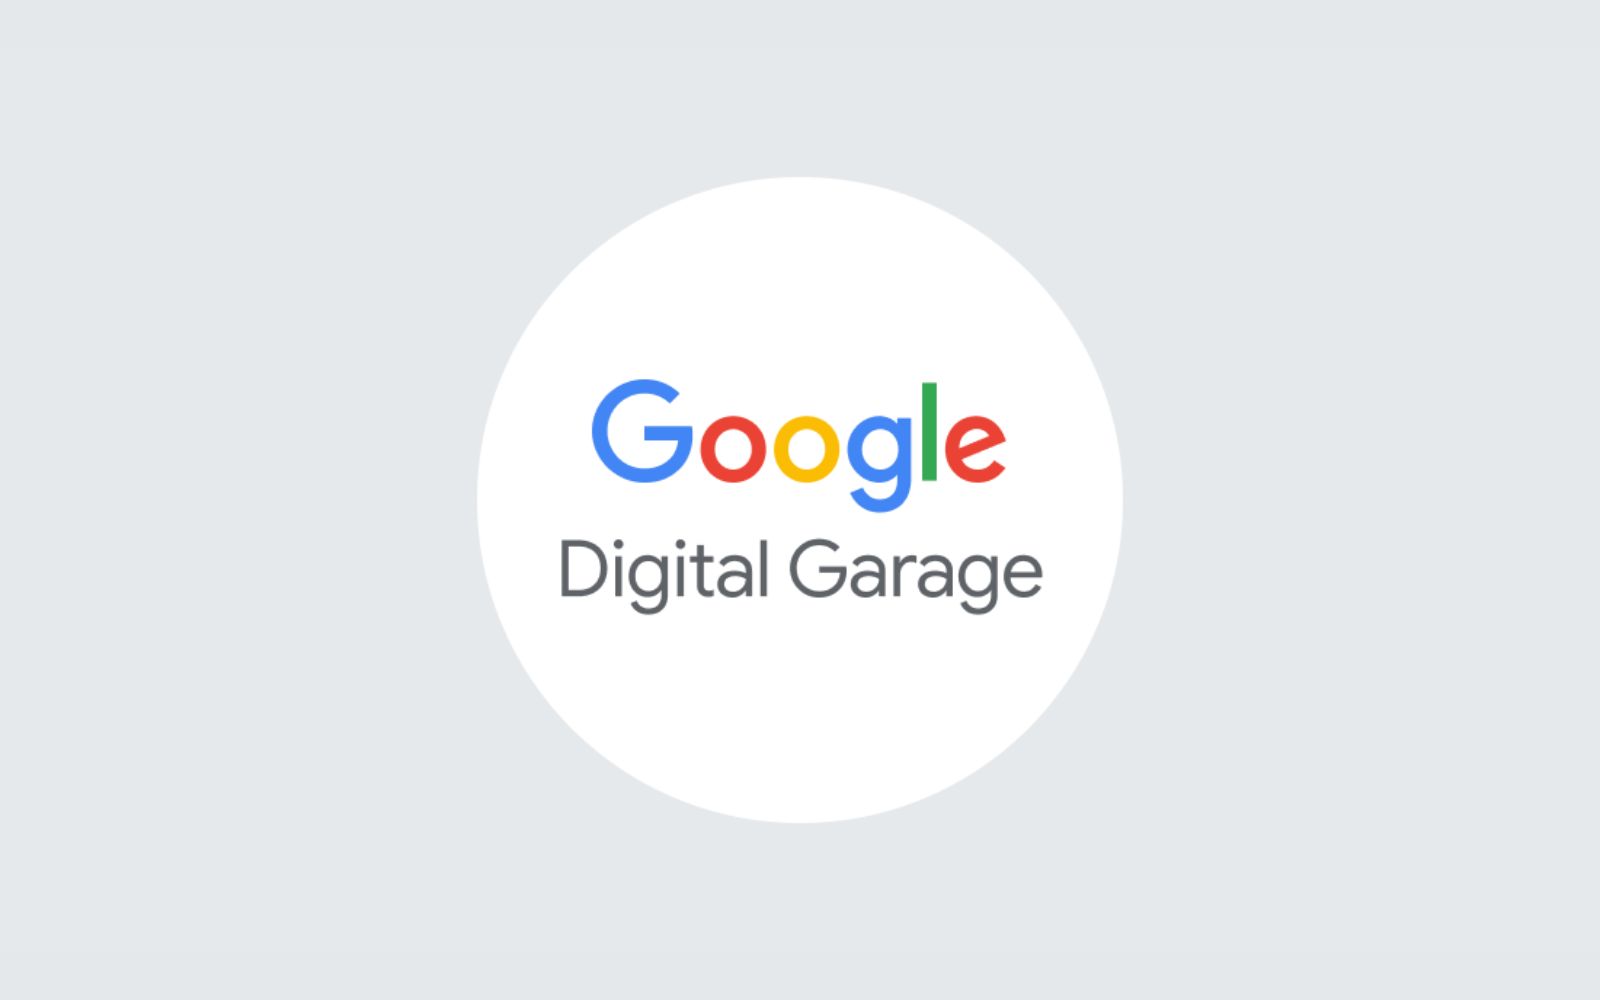 Digital Garage by Google